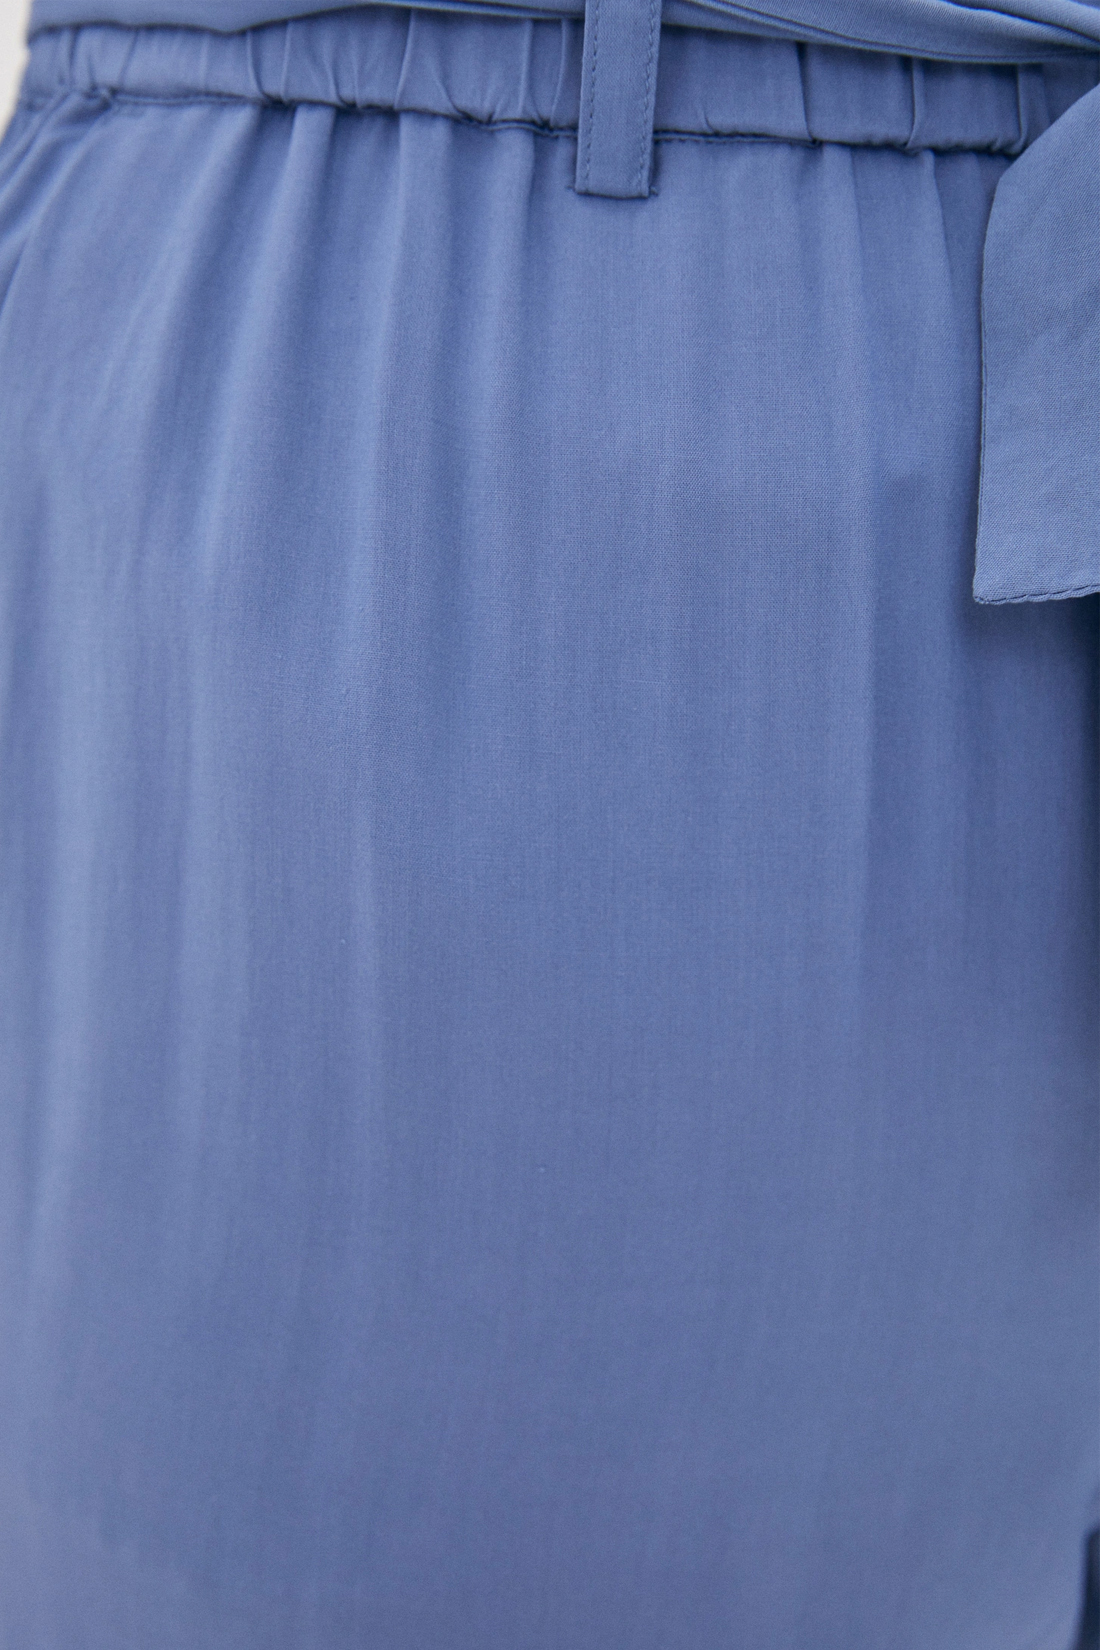 Брюки с завязывающимся поясом (арт. baon B290034), размер XS, цвет синий Брюки с завязывающимся поясом (арт. baon B290034) - фото 3